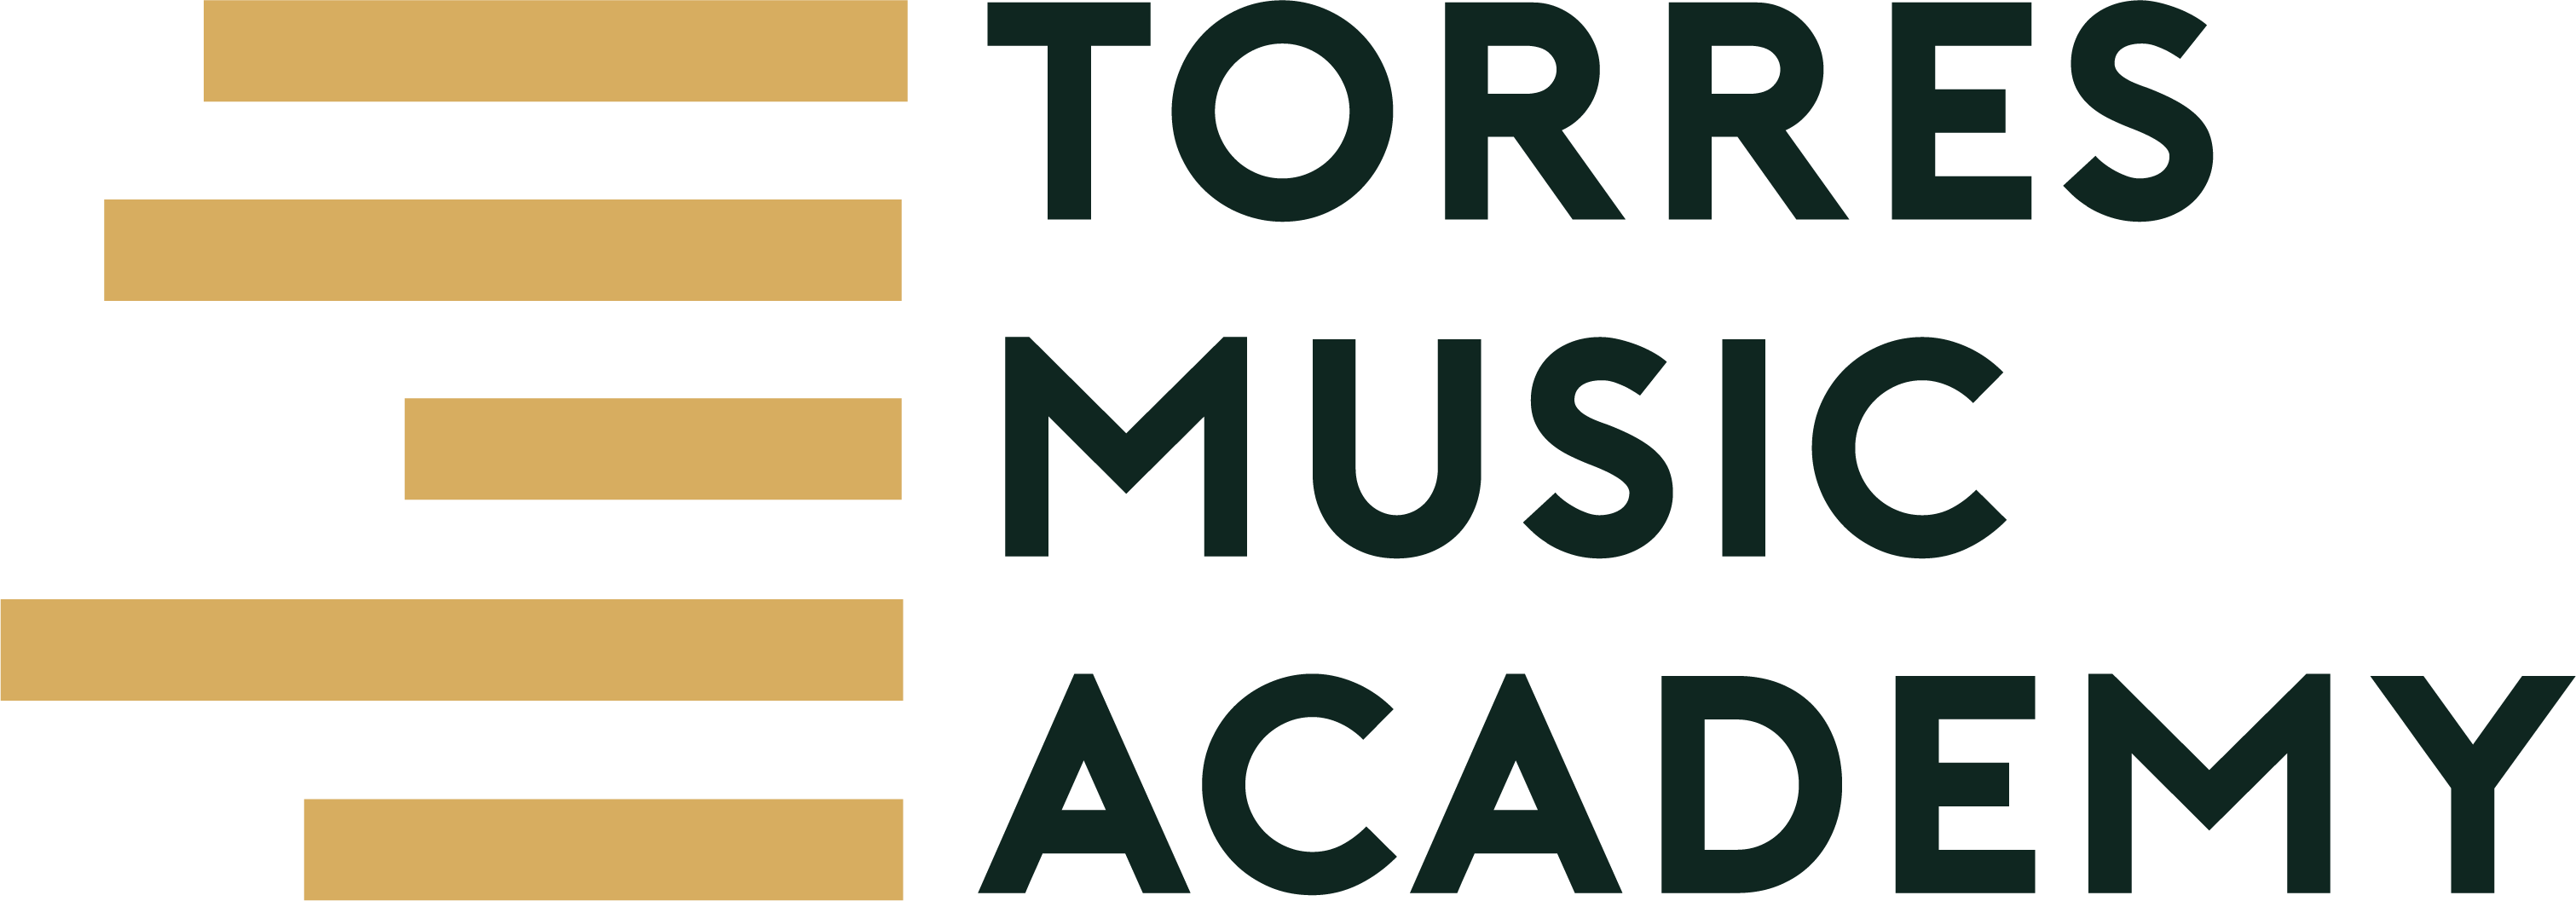 Torres Music Academy Logo